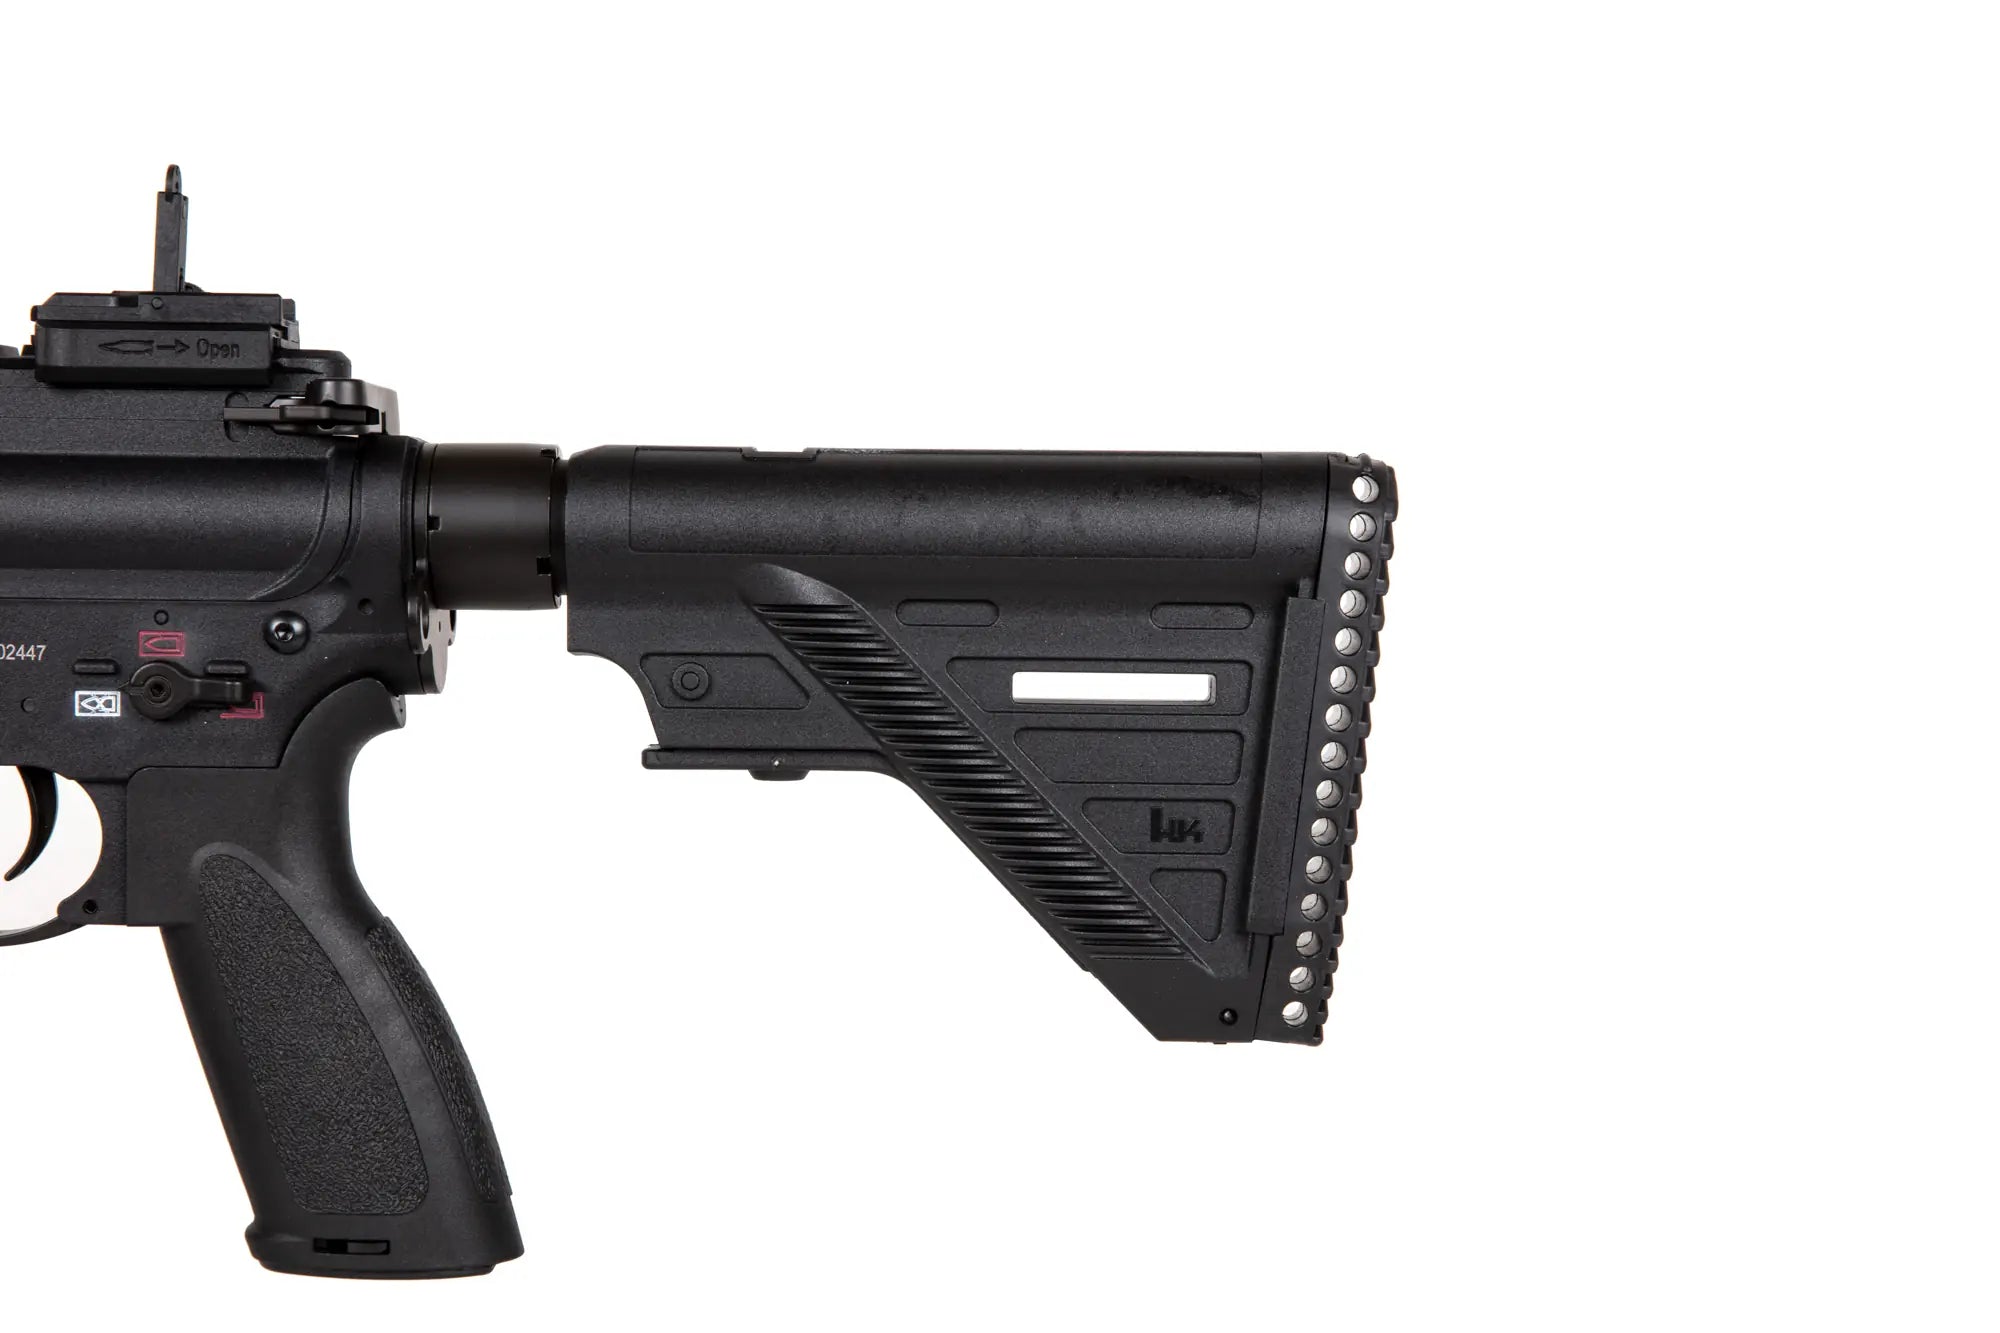 Umarex HK416A5 adjustable stock